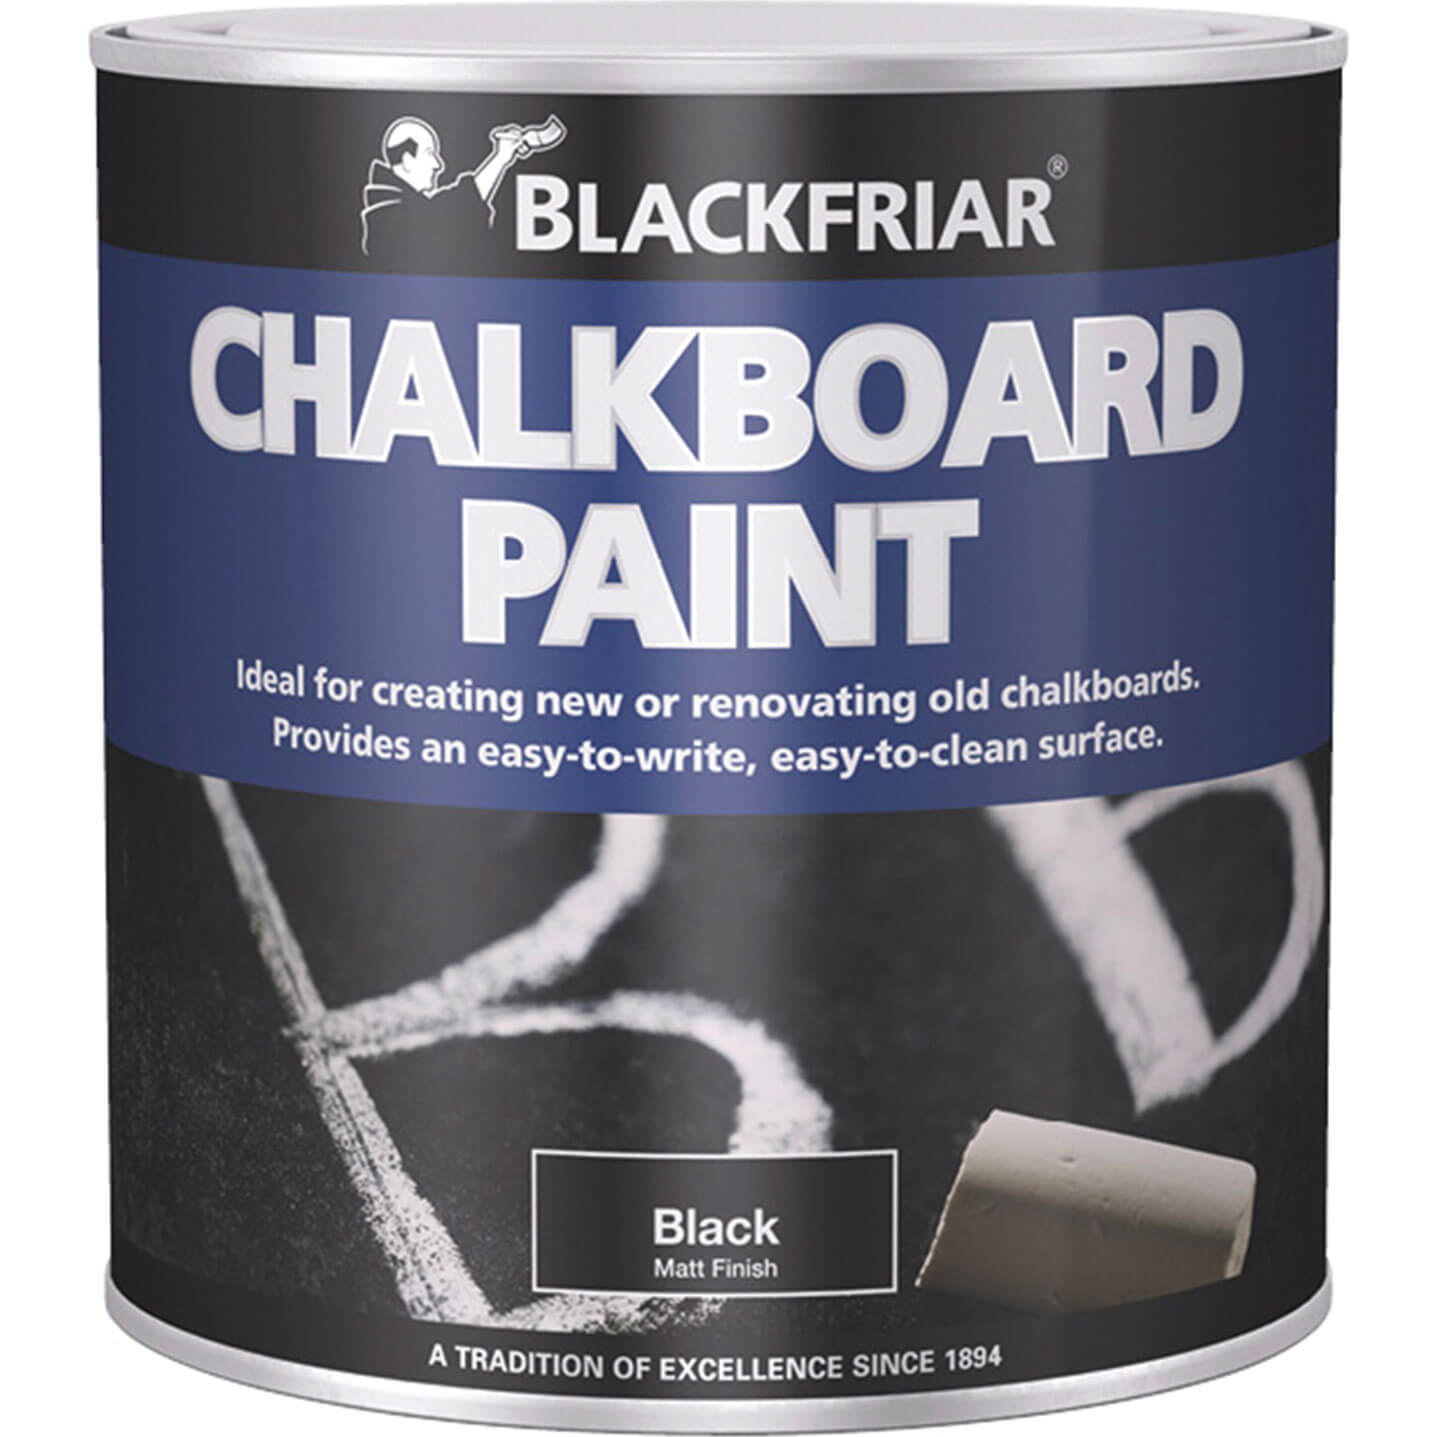 Image of Blackfriar Chalkboard Paint for Renovating or Creating Chalkboards Black 250ml